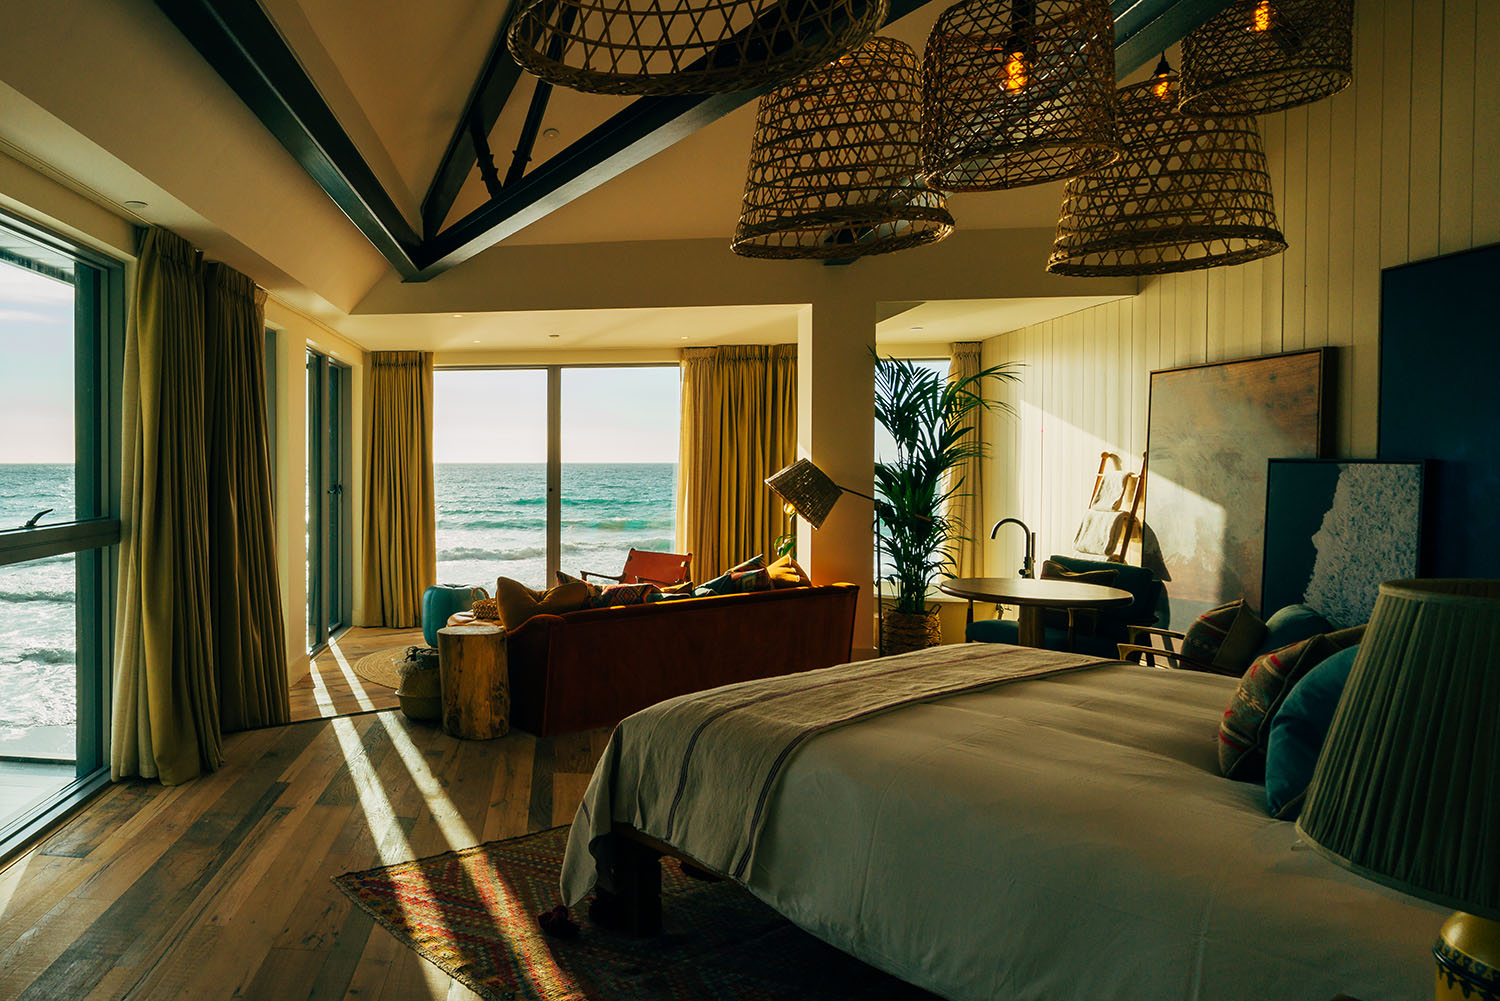 bedroom with ocean views